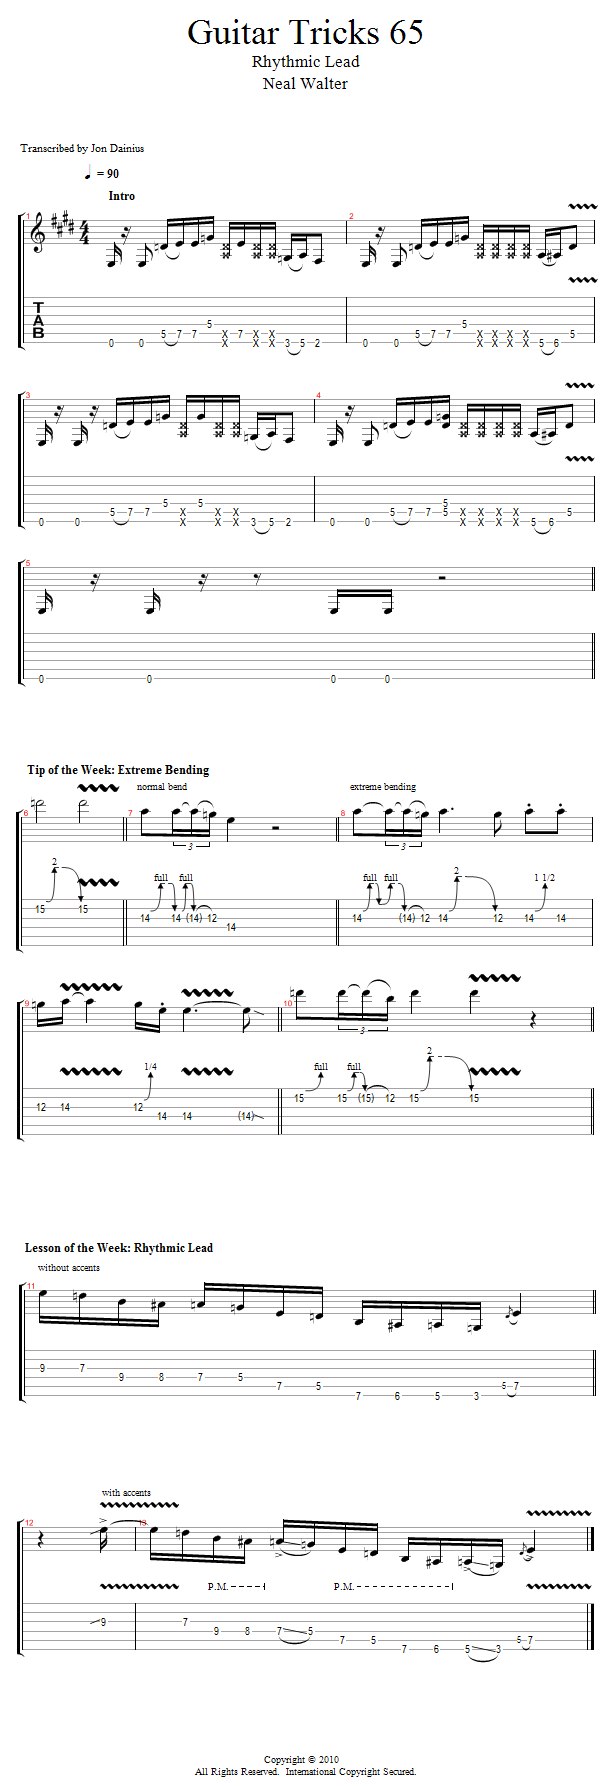 Guitar Tricks 65: Rhythmic Lead song notation